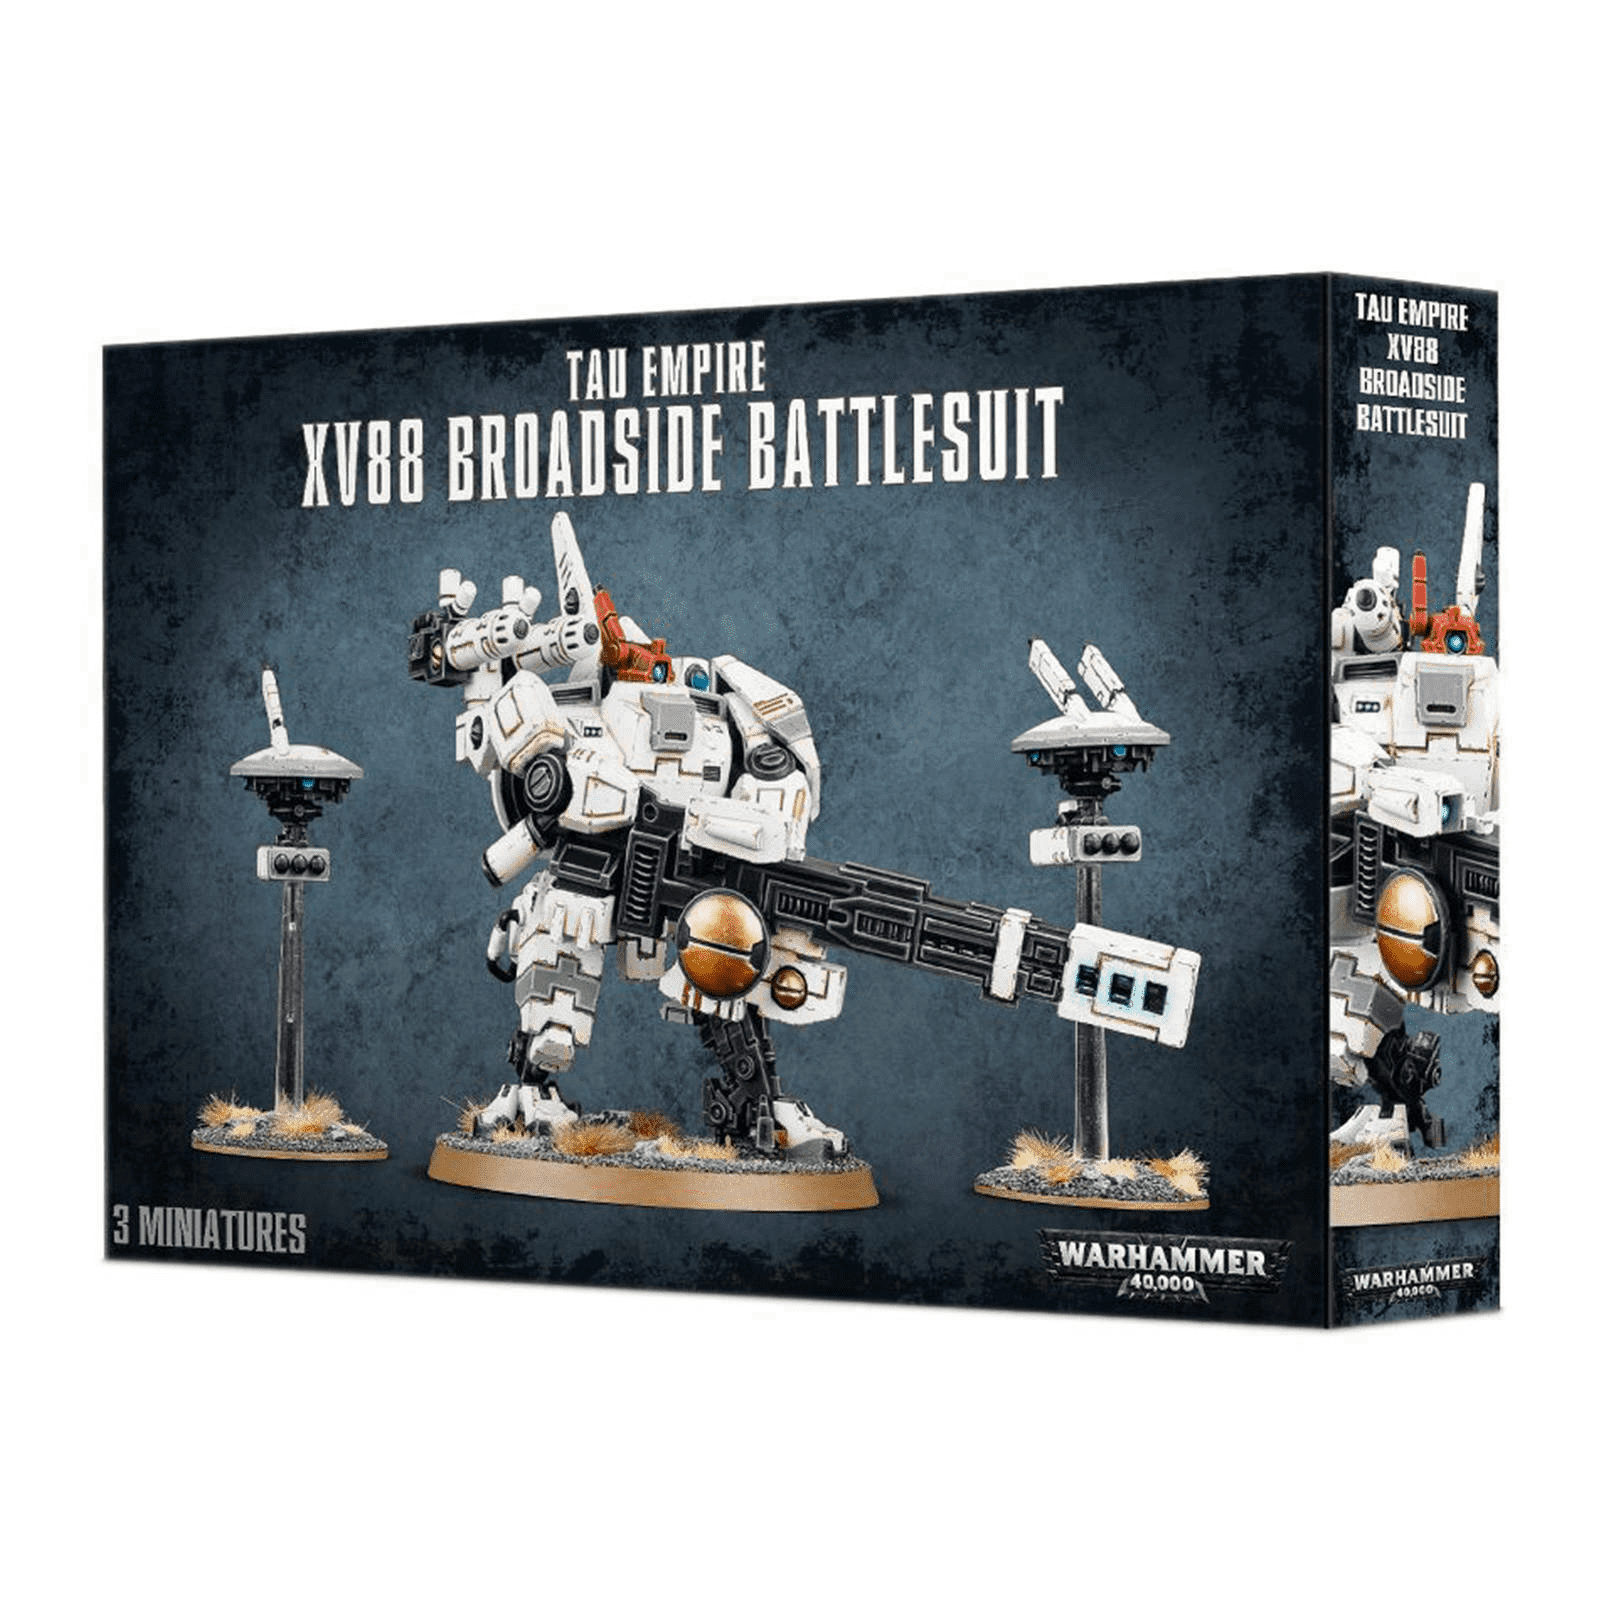 Warhammer Tau Empire XV88 Broadside Battlesuit - Warhammer